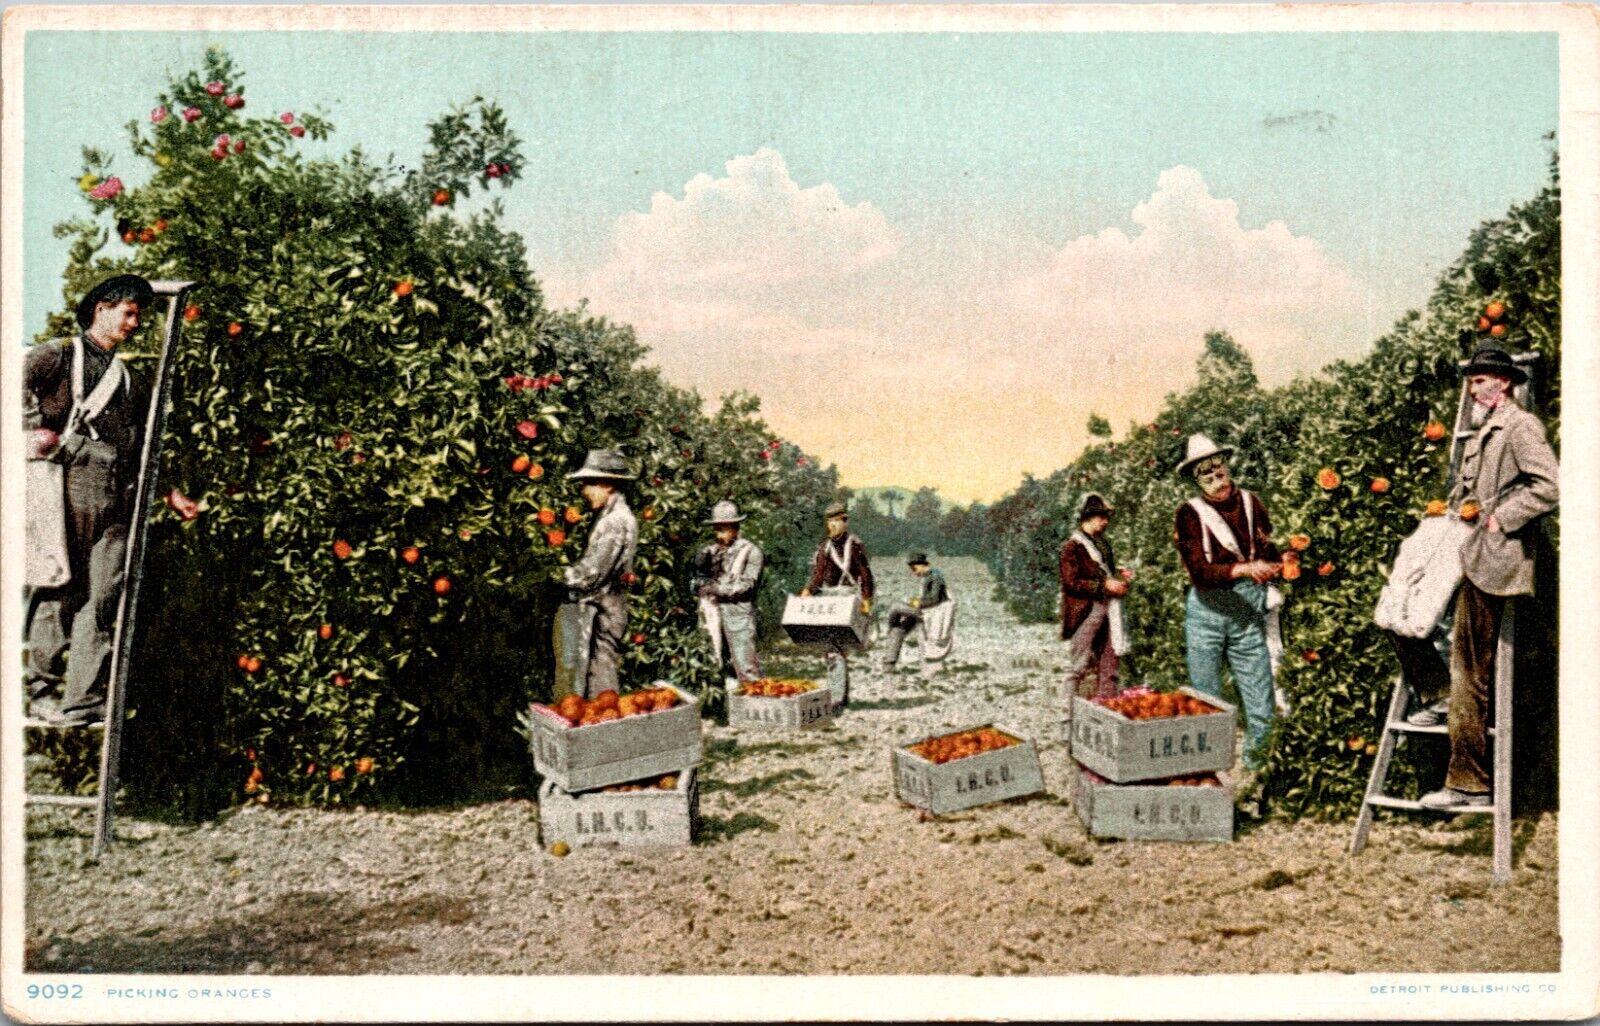 People Picking Oranges Wooden Crates Vintage Postcard